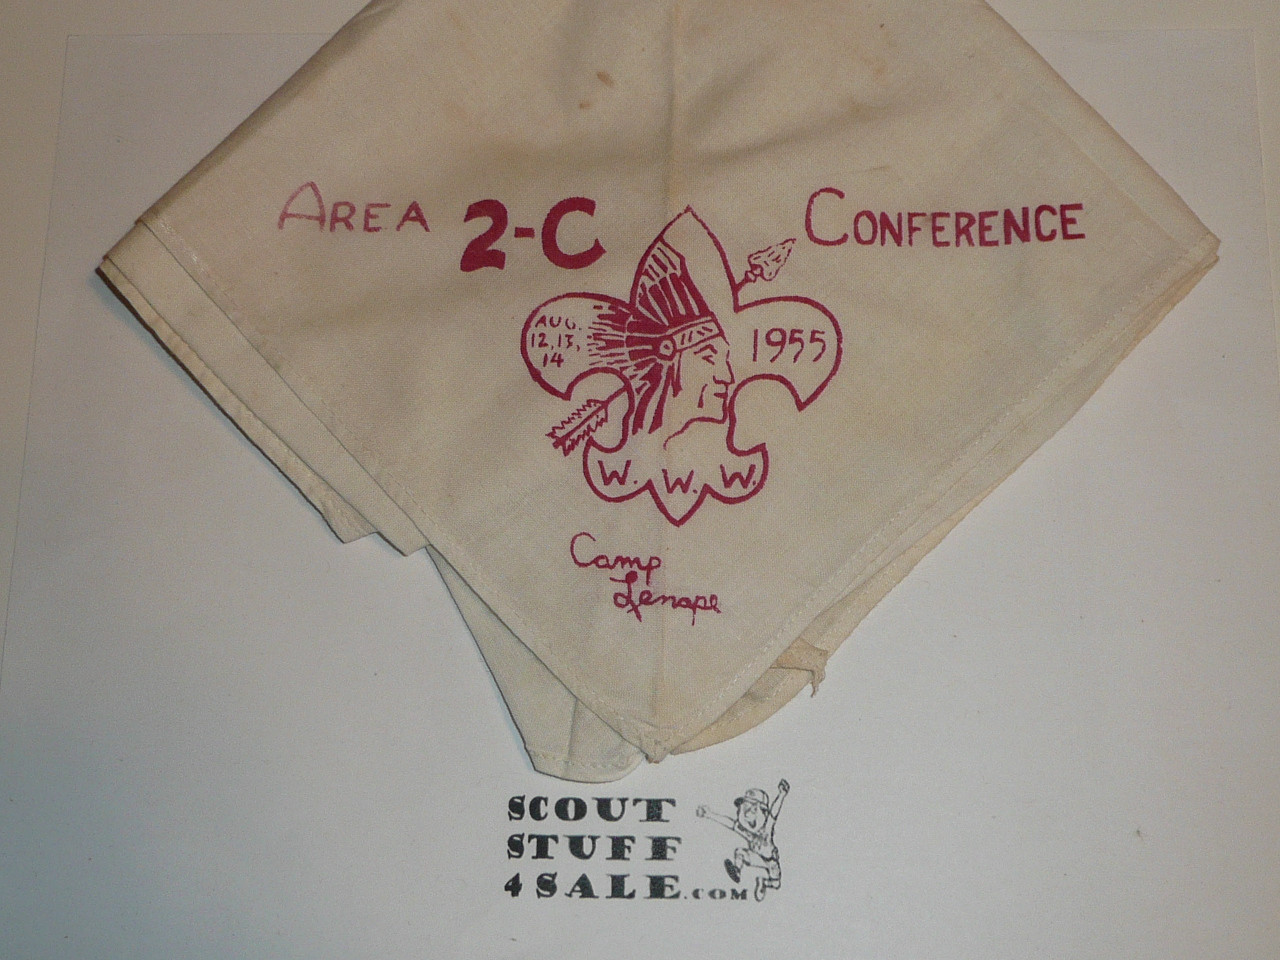 Section / Area 2C Order of the Arrow Conference Neckerchief & Wood Neckerchief Slide, 1955